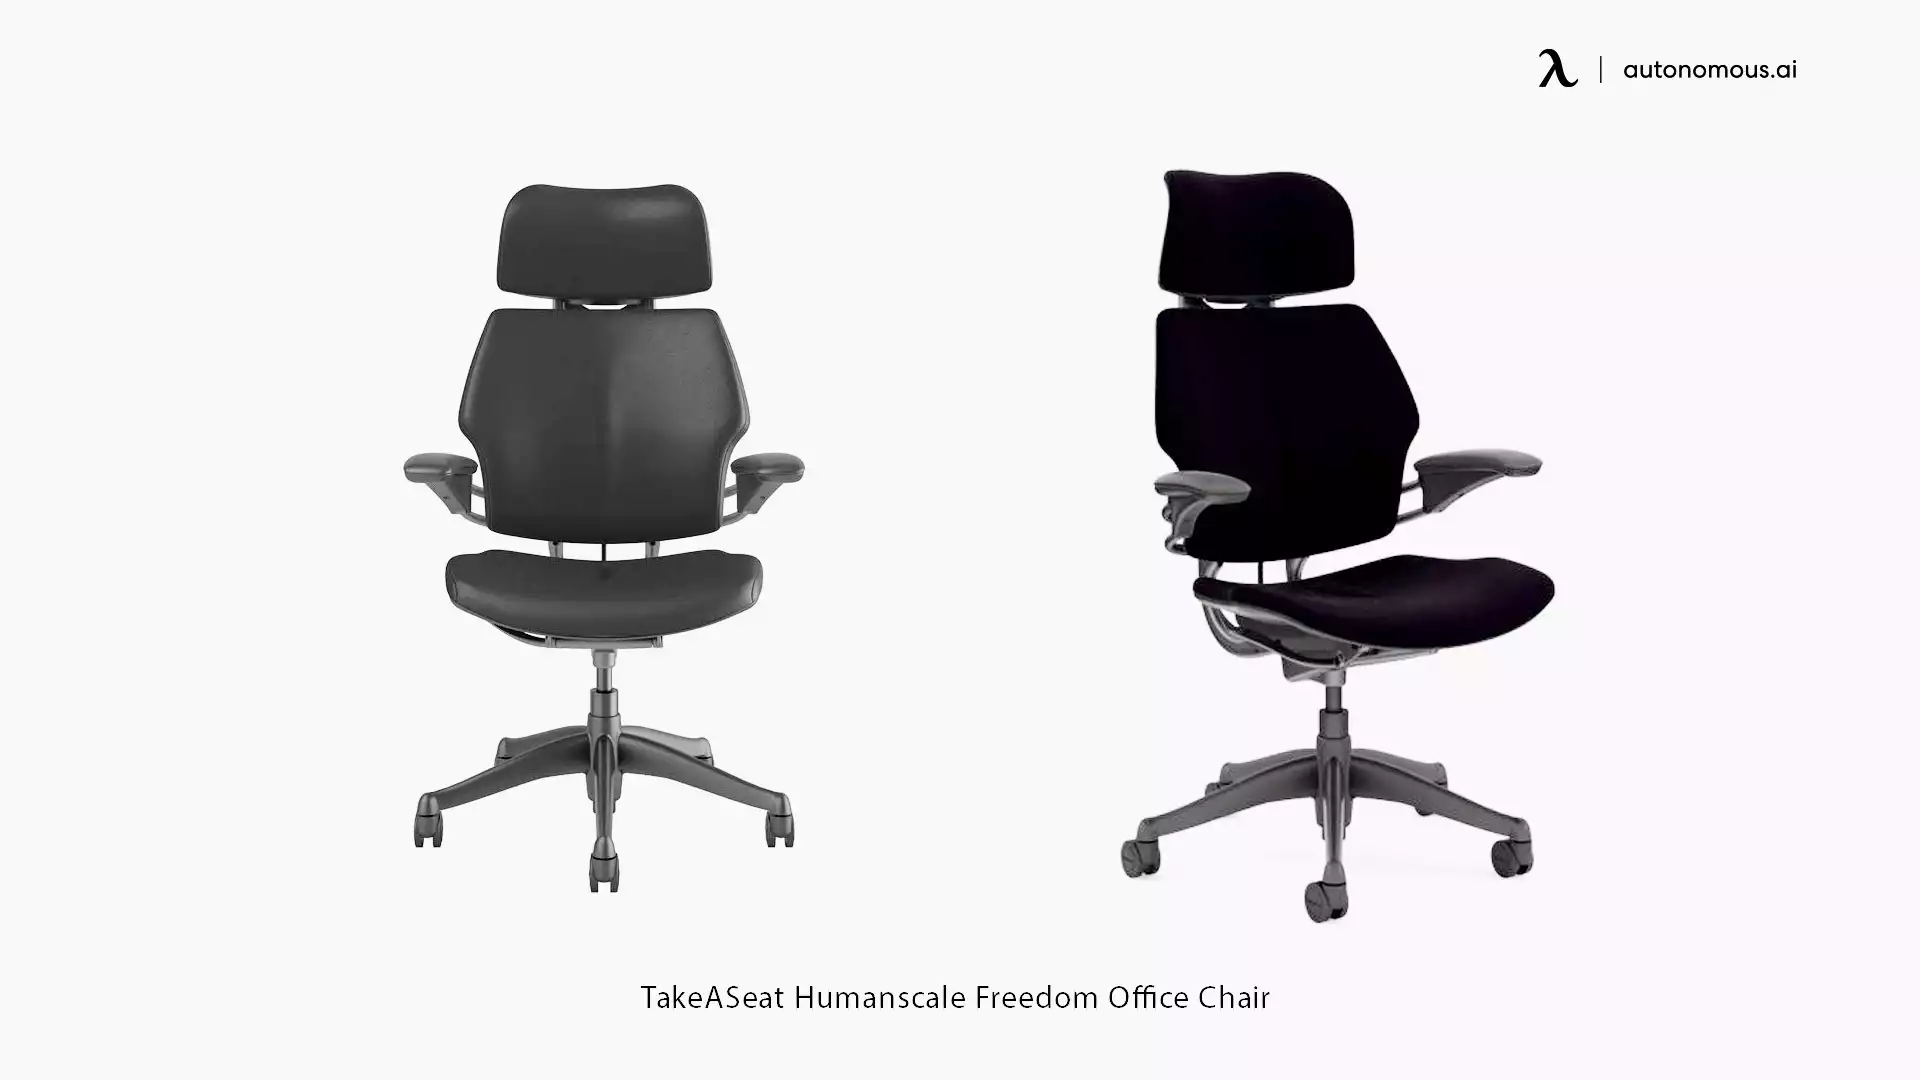 Humanscale Freedom Headrest Chair - luxury office chair